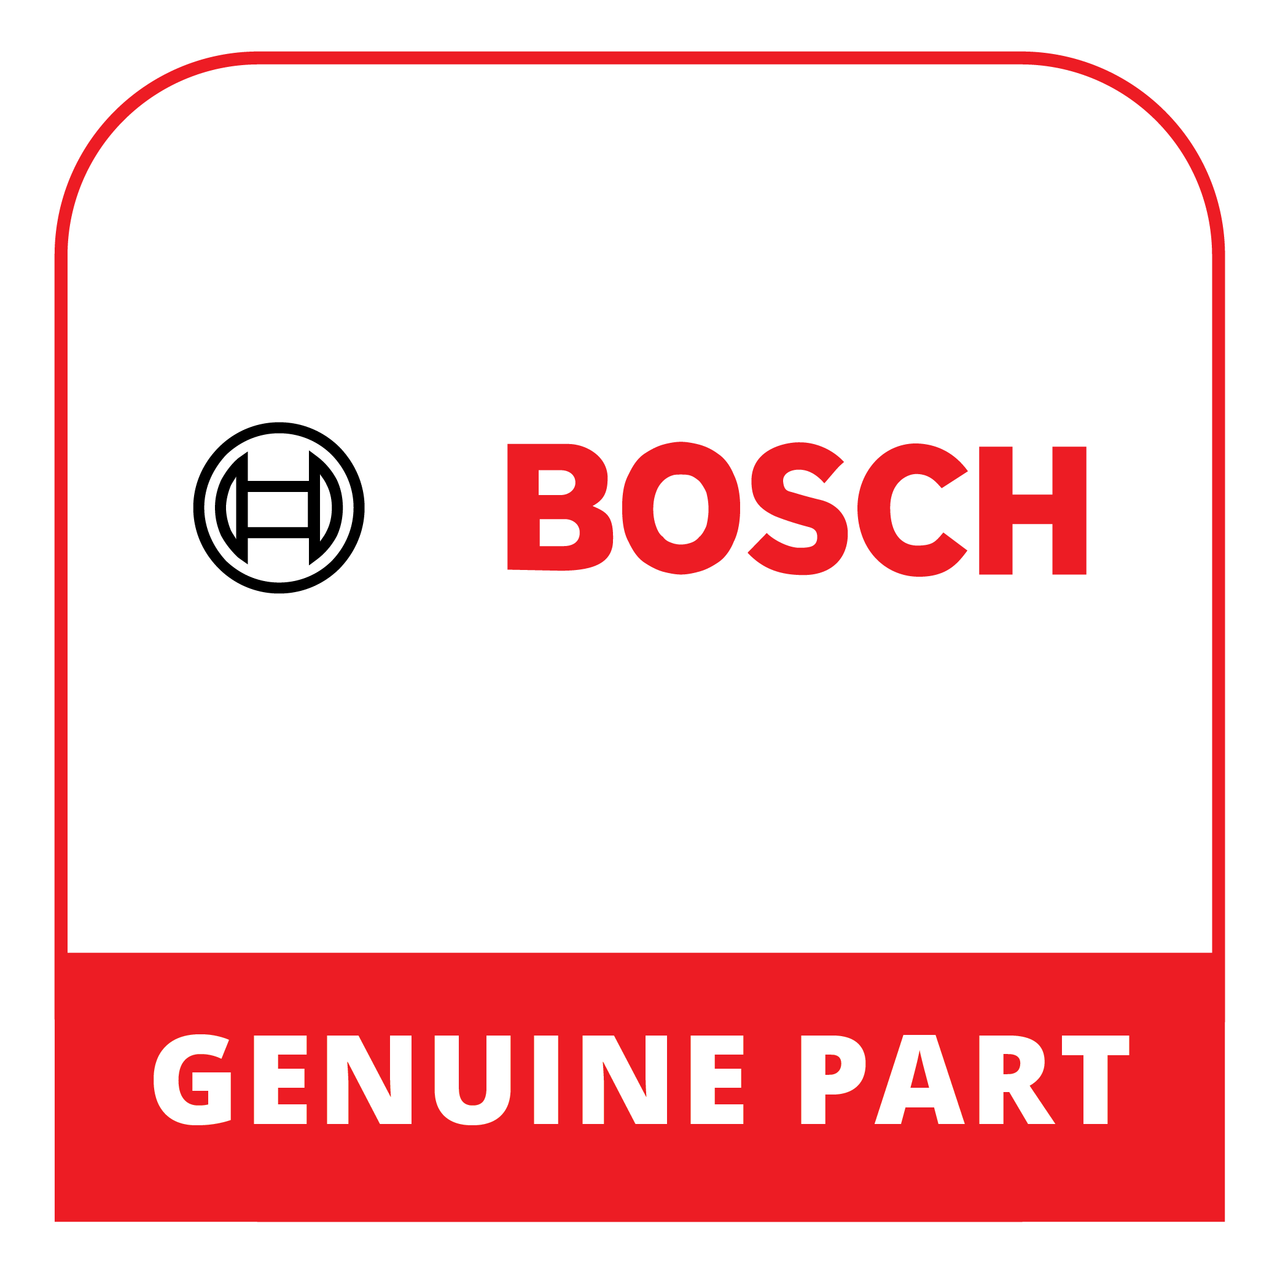 Bosch (Thermador) 20000033 - Worktop - Genuine Bosch (Thermador) Part